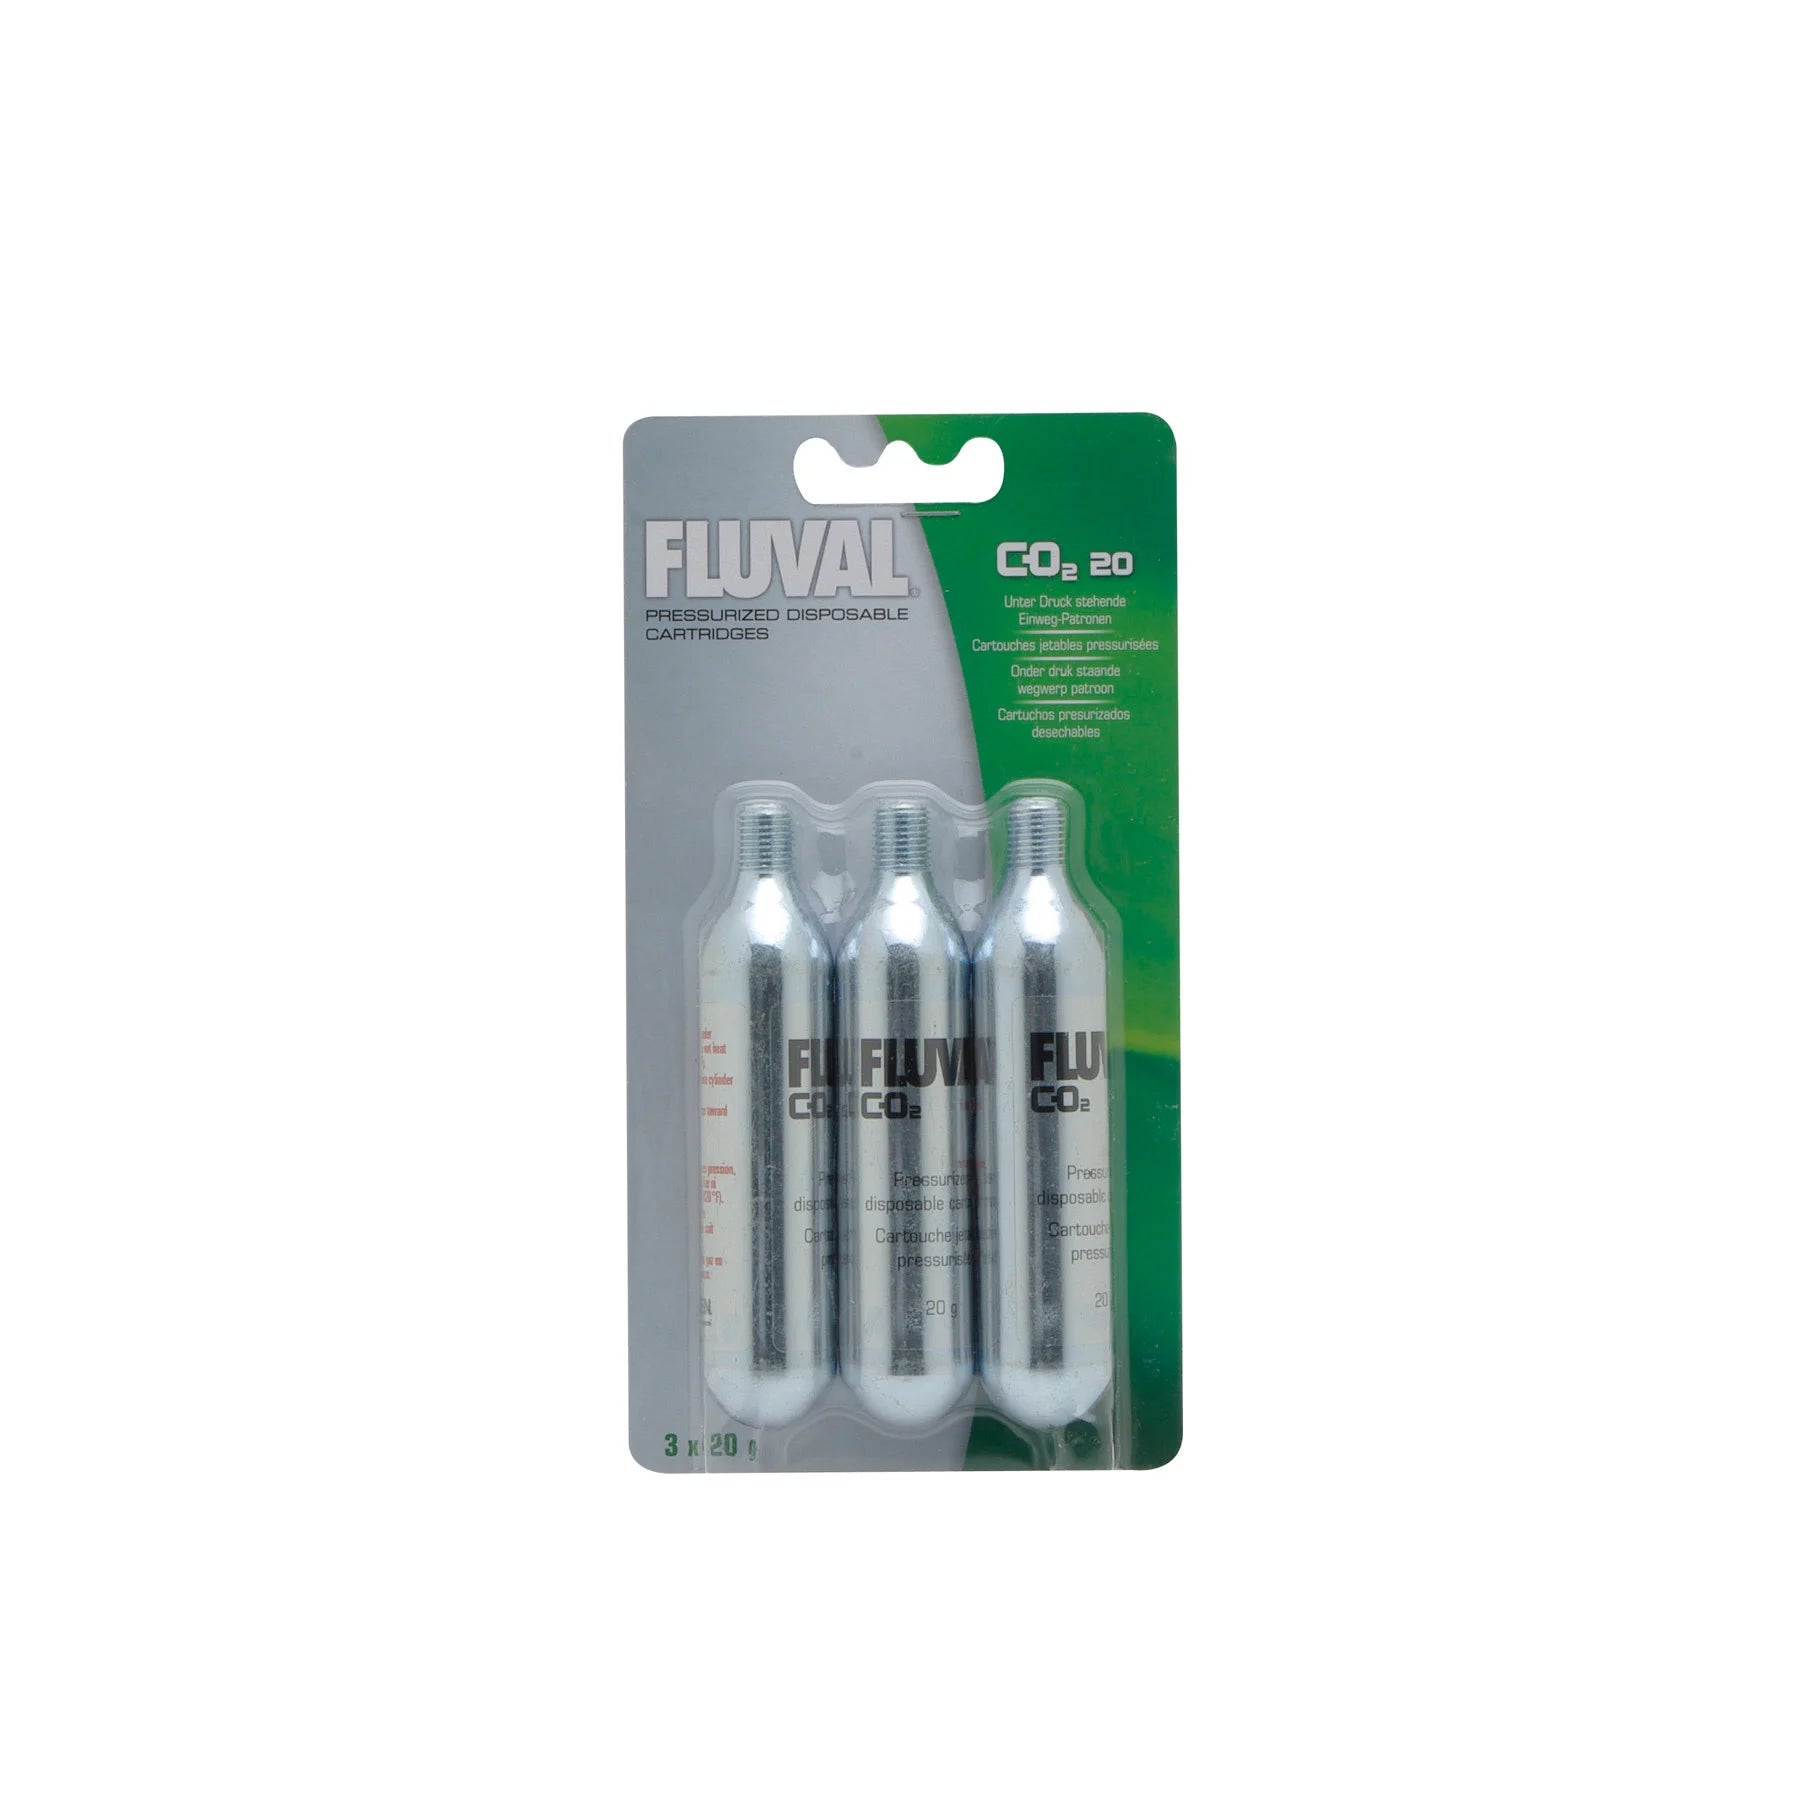 Fluval Pressurized 20g CO2 Disposable Cartridge- 3 Pack